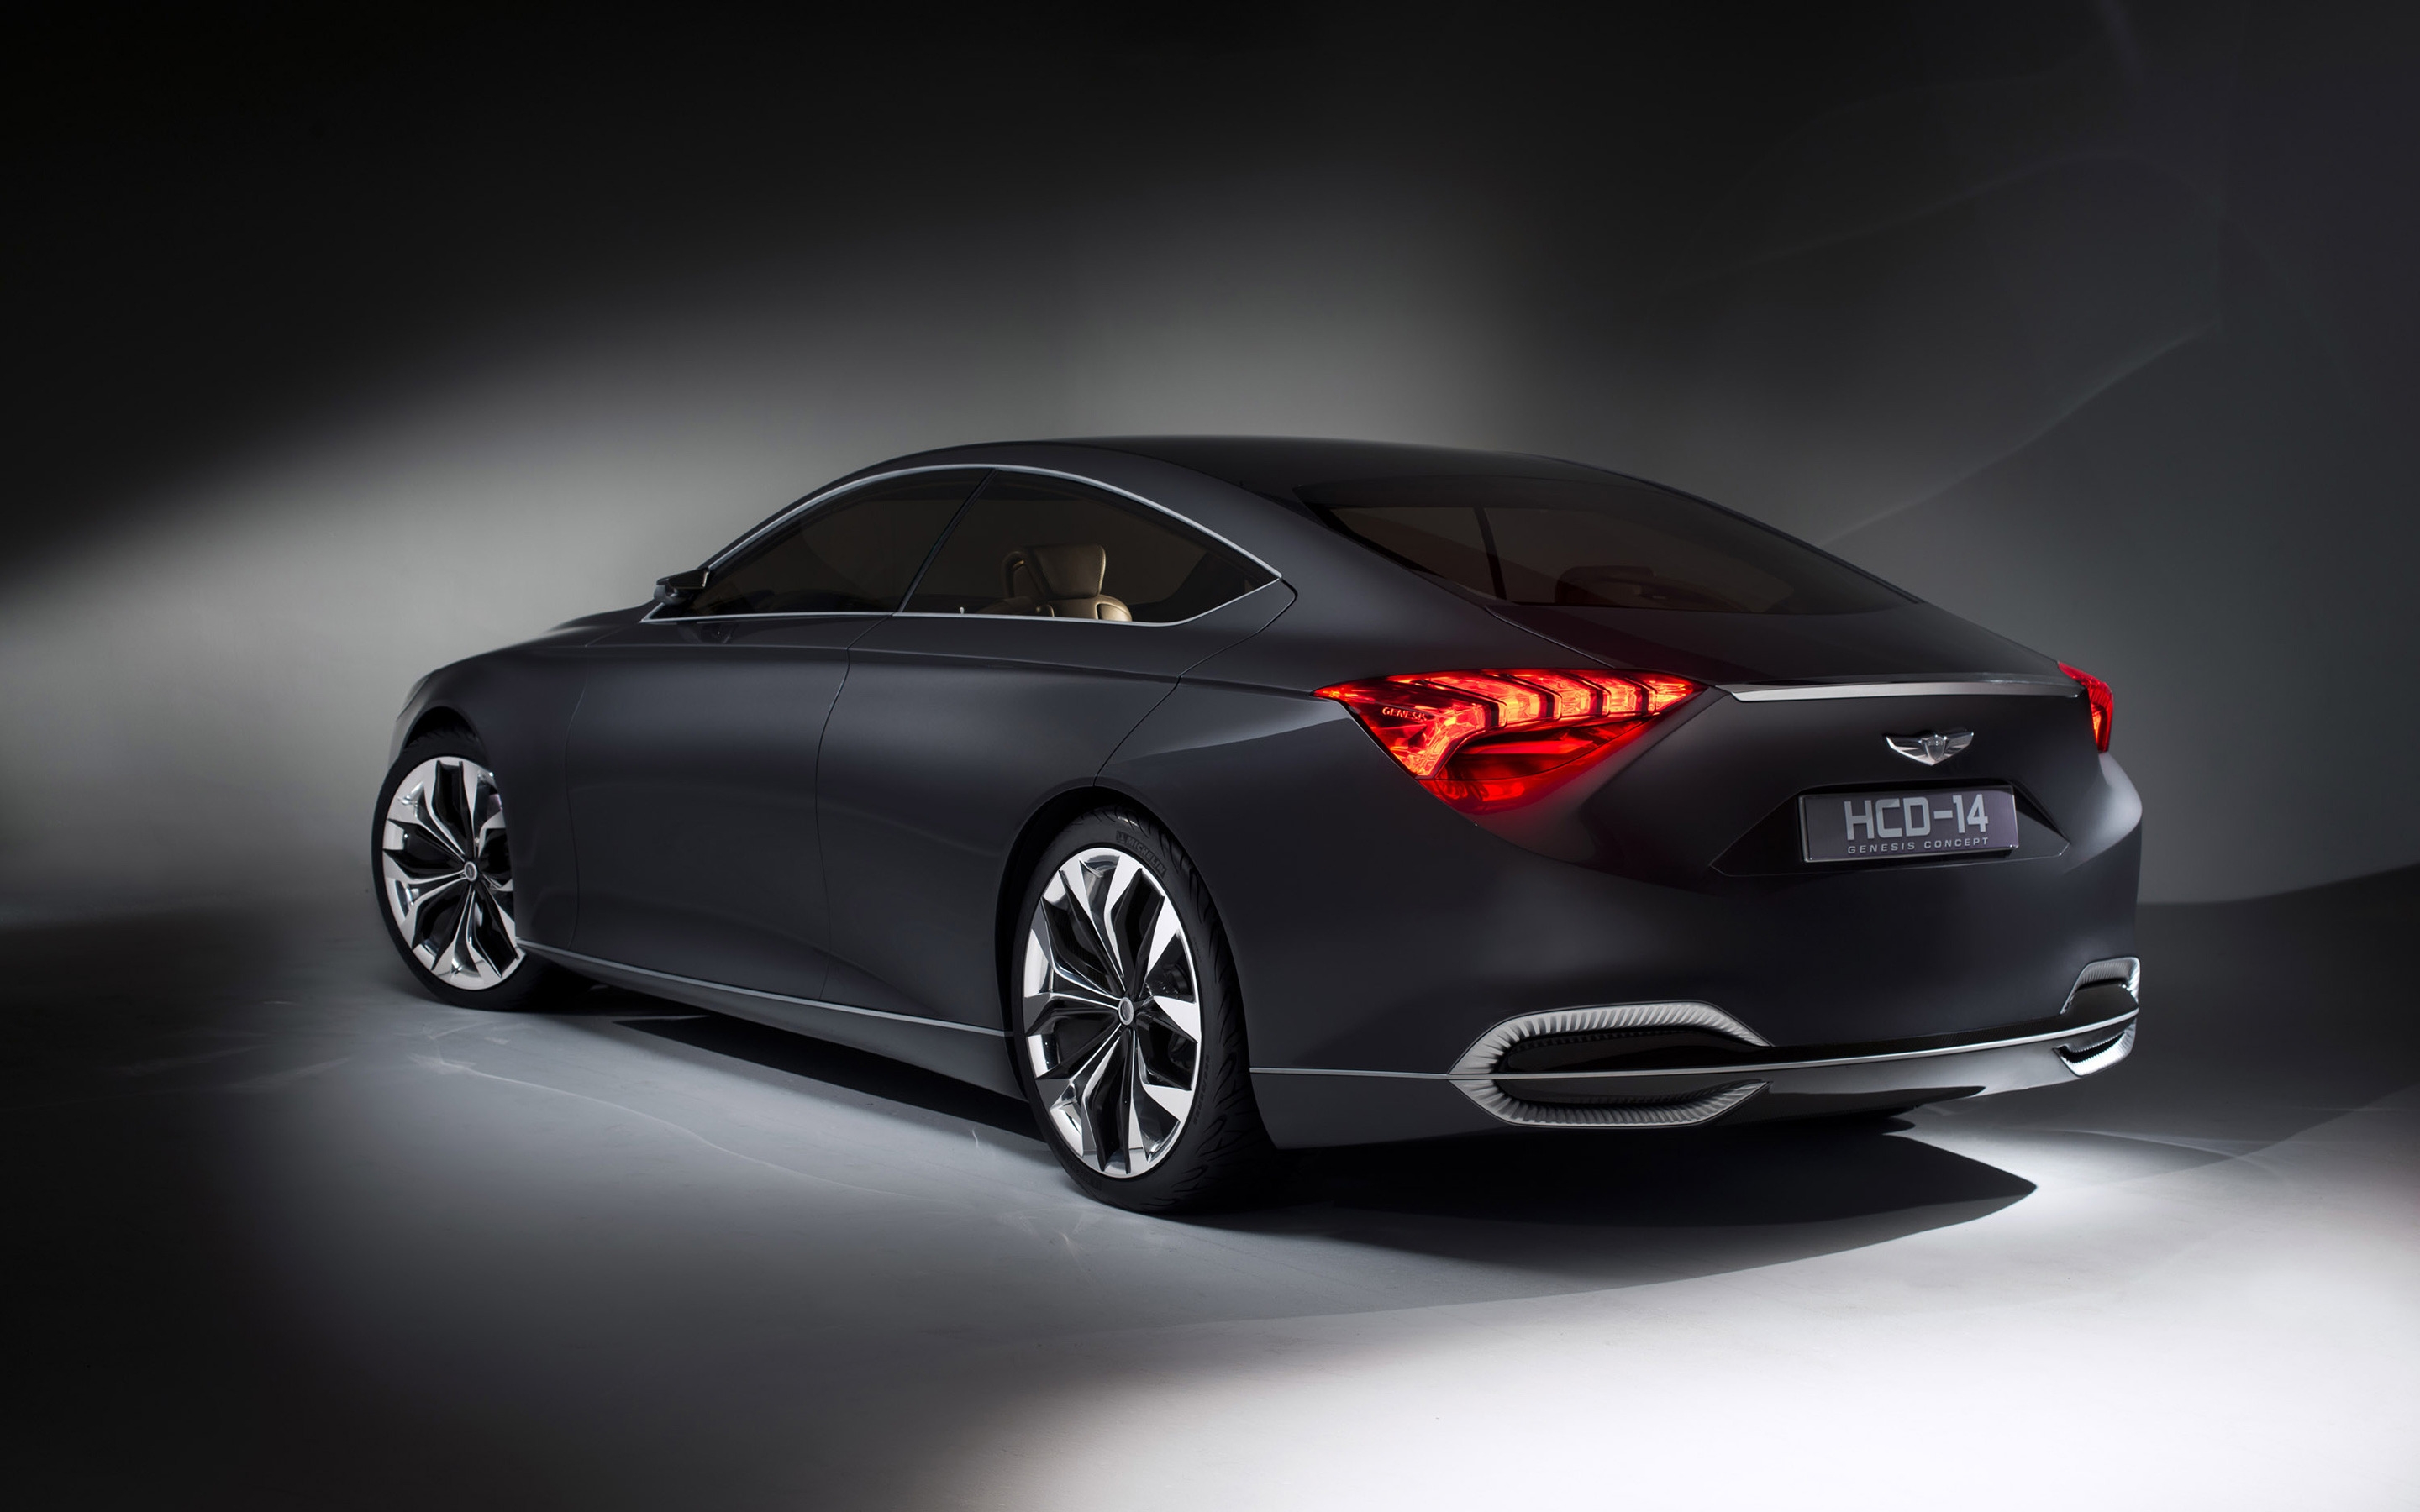 Rear of Hyundai Genesis Concept for 2880 x 1800 Retina Display resolution